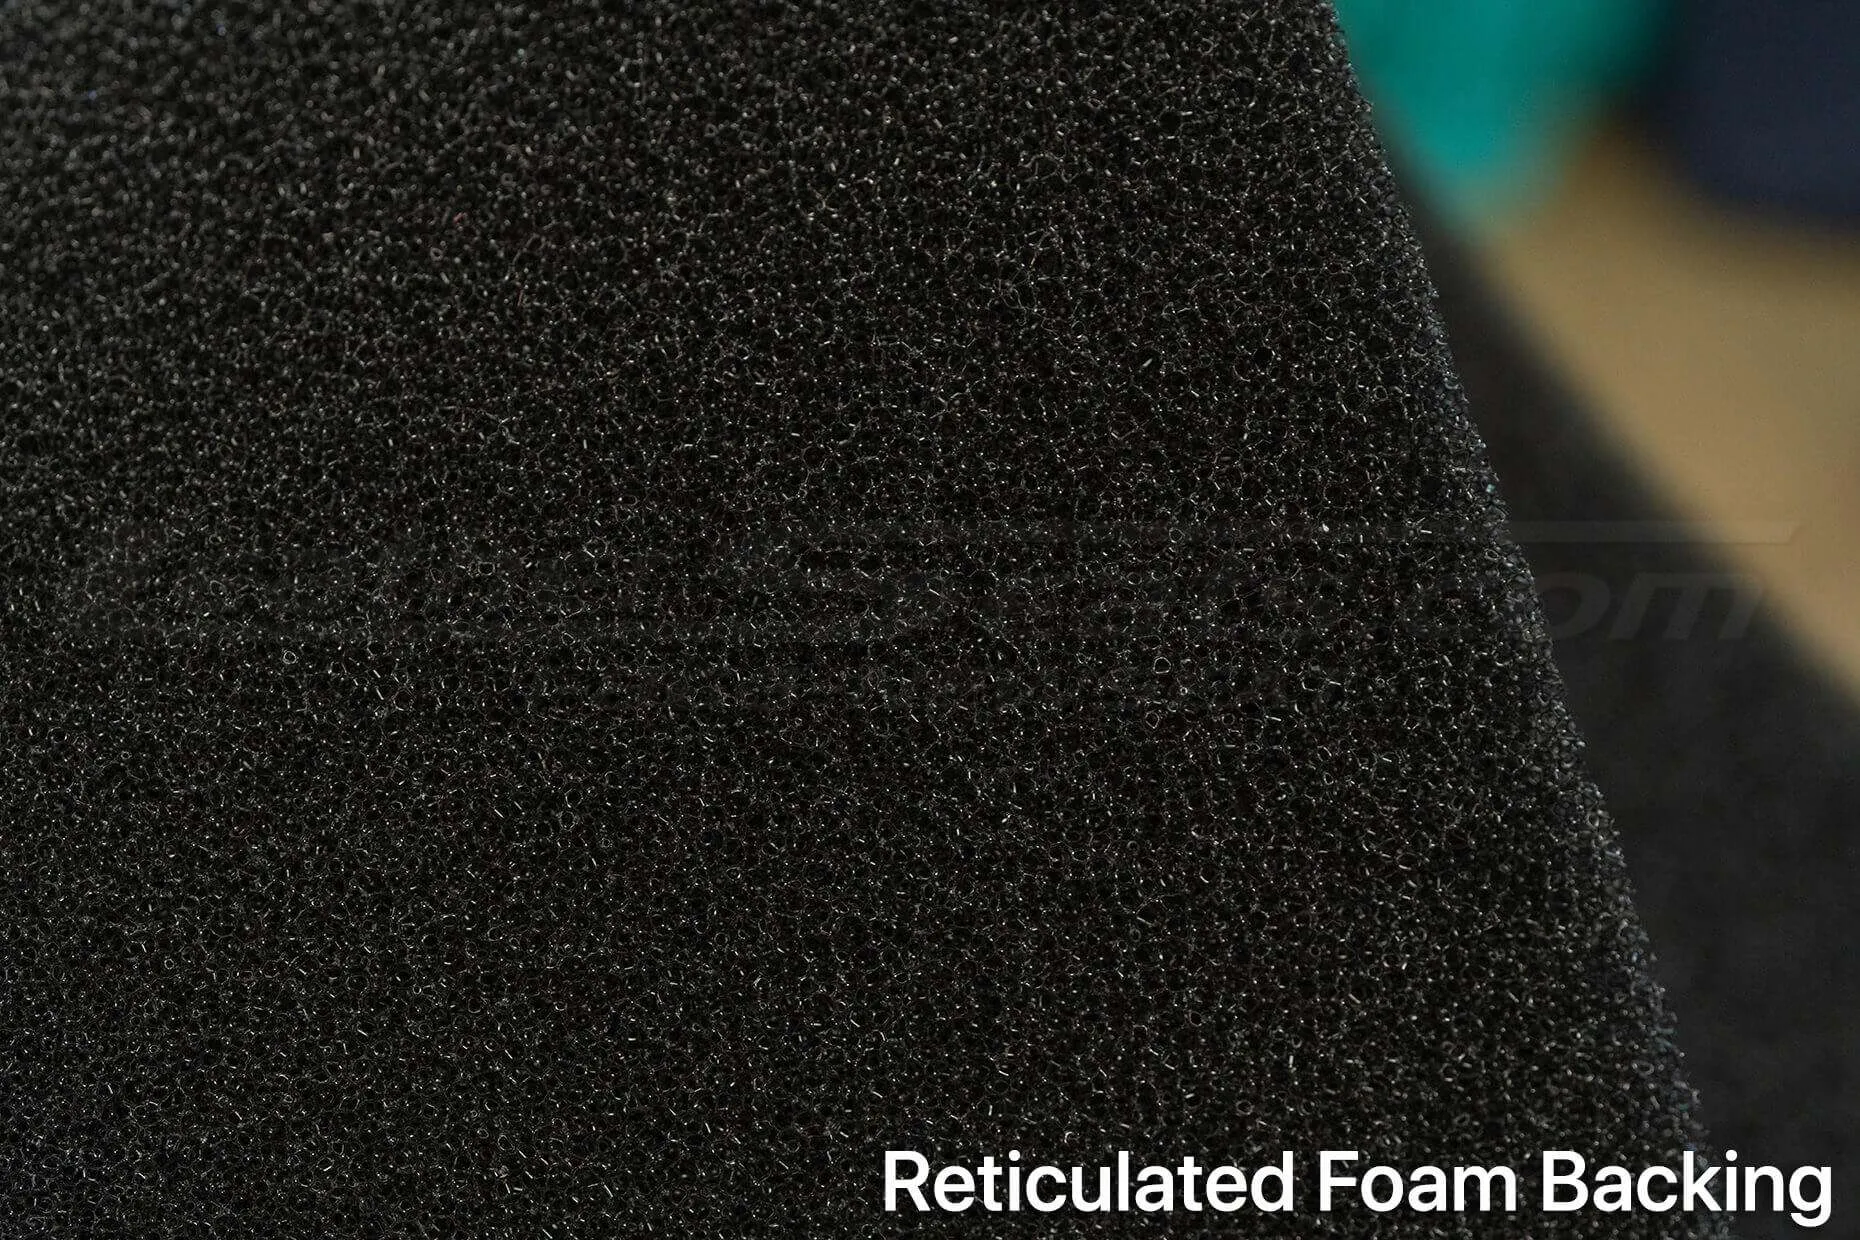 Reticulated backing foam close-up